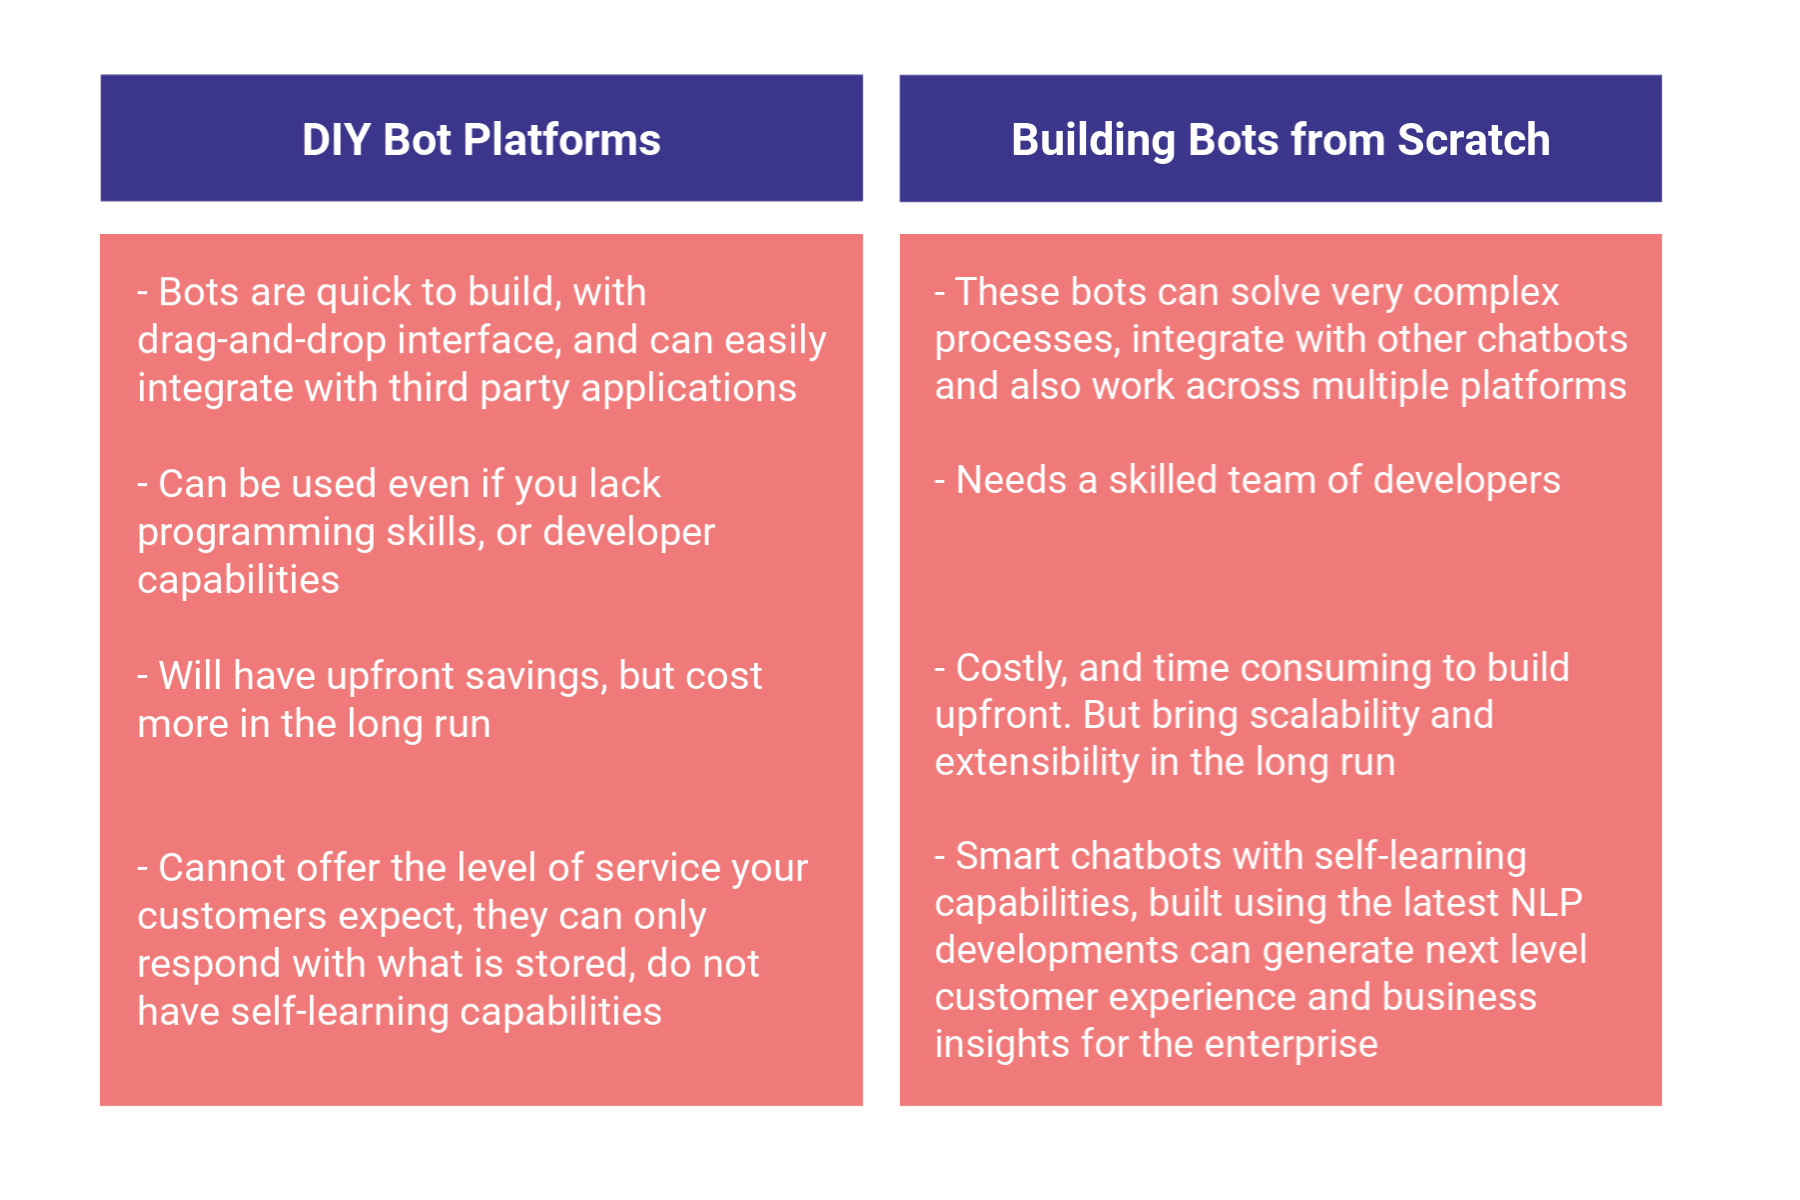 DIY Bot Platforms vs Building from scratch 